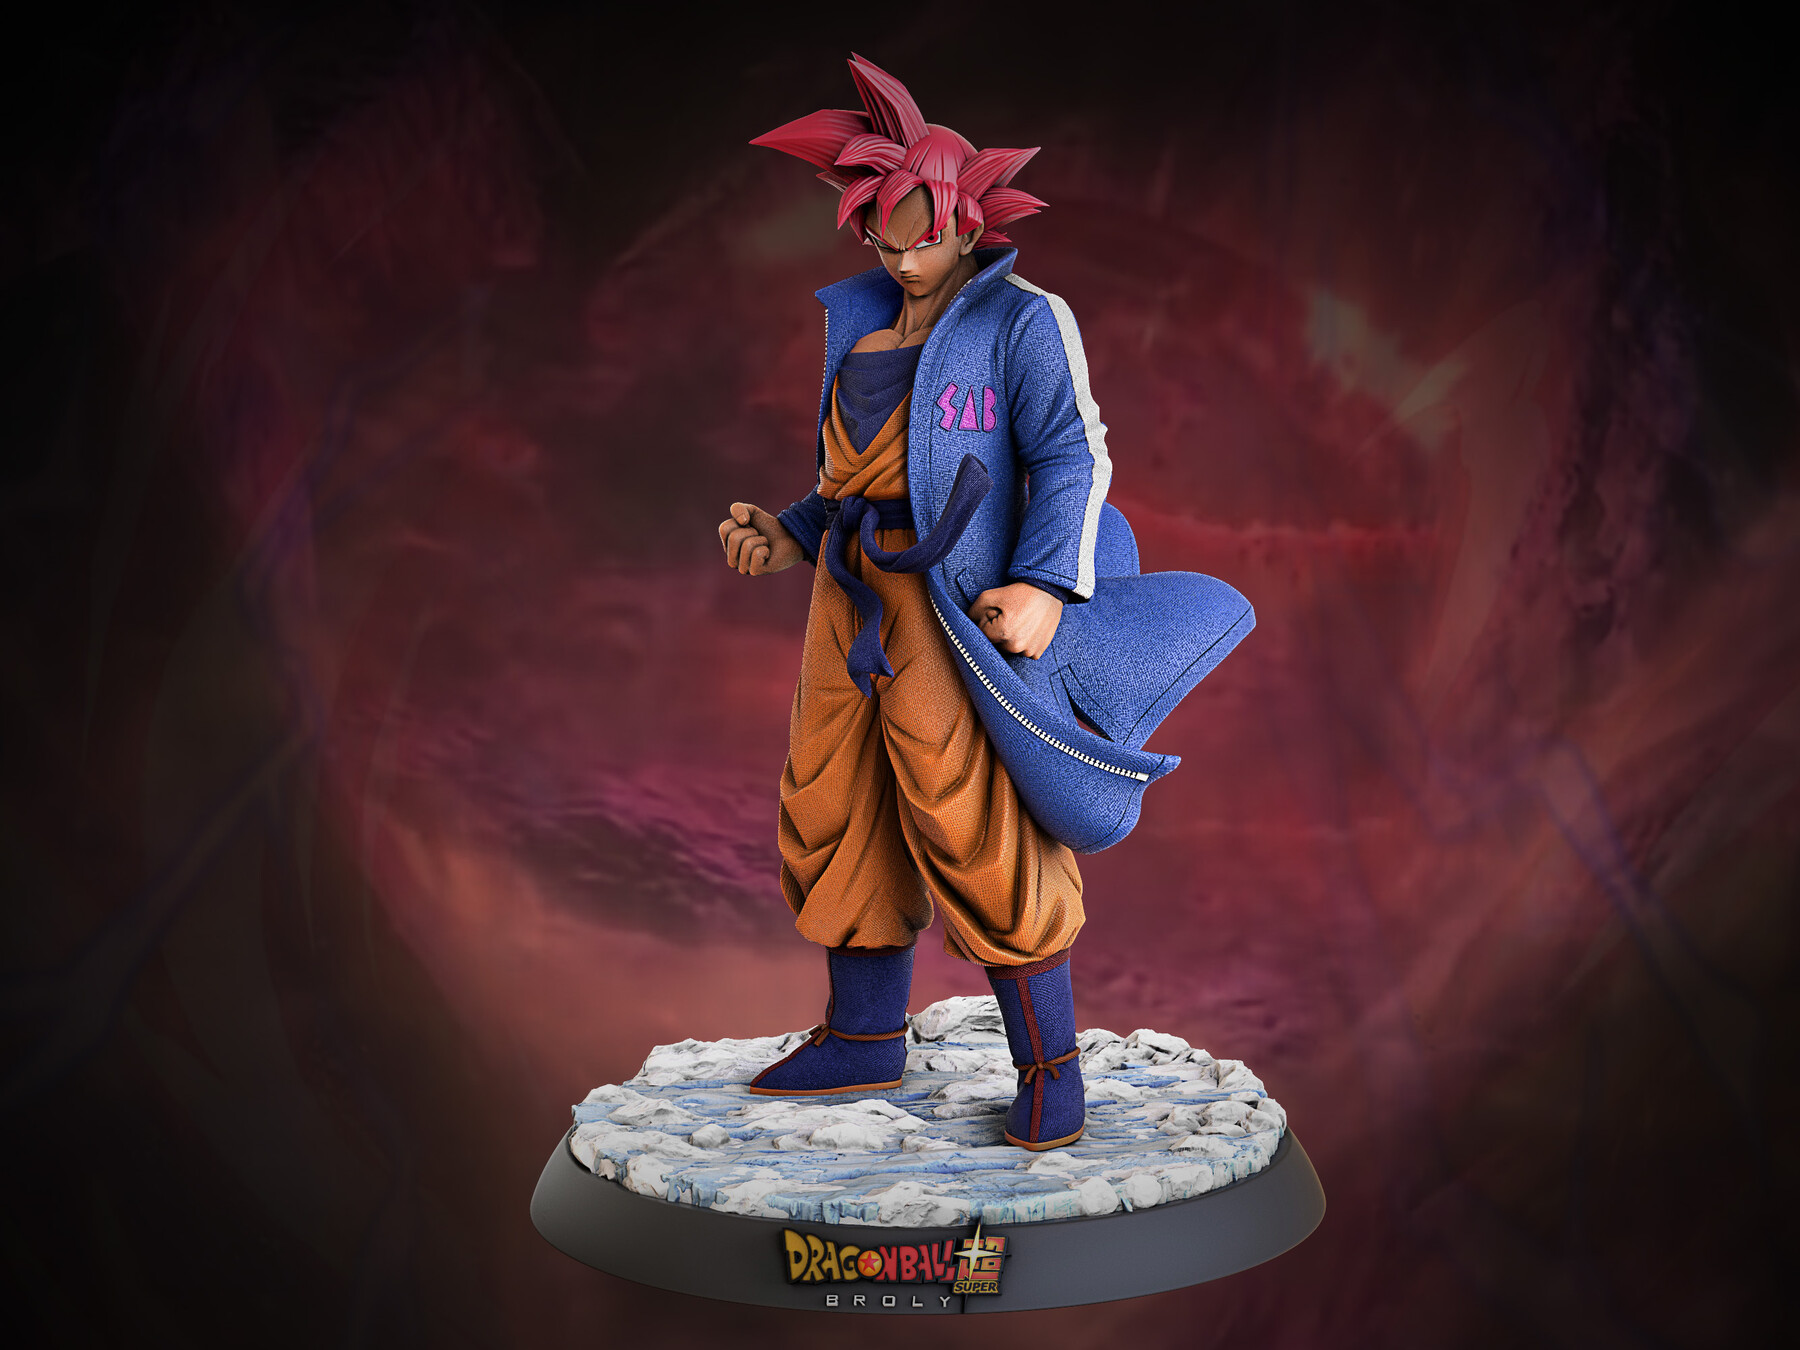 Son-Goku Super-Saiyajin God Child Costume 